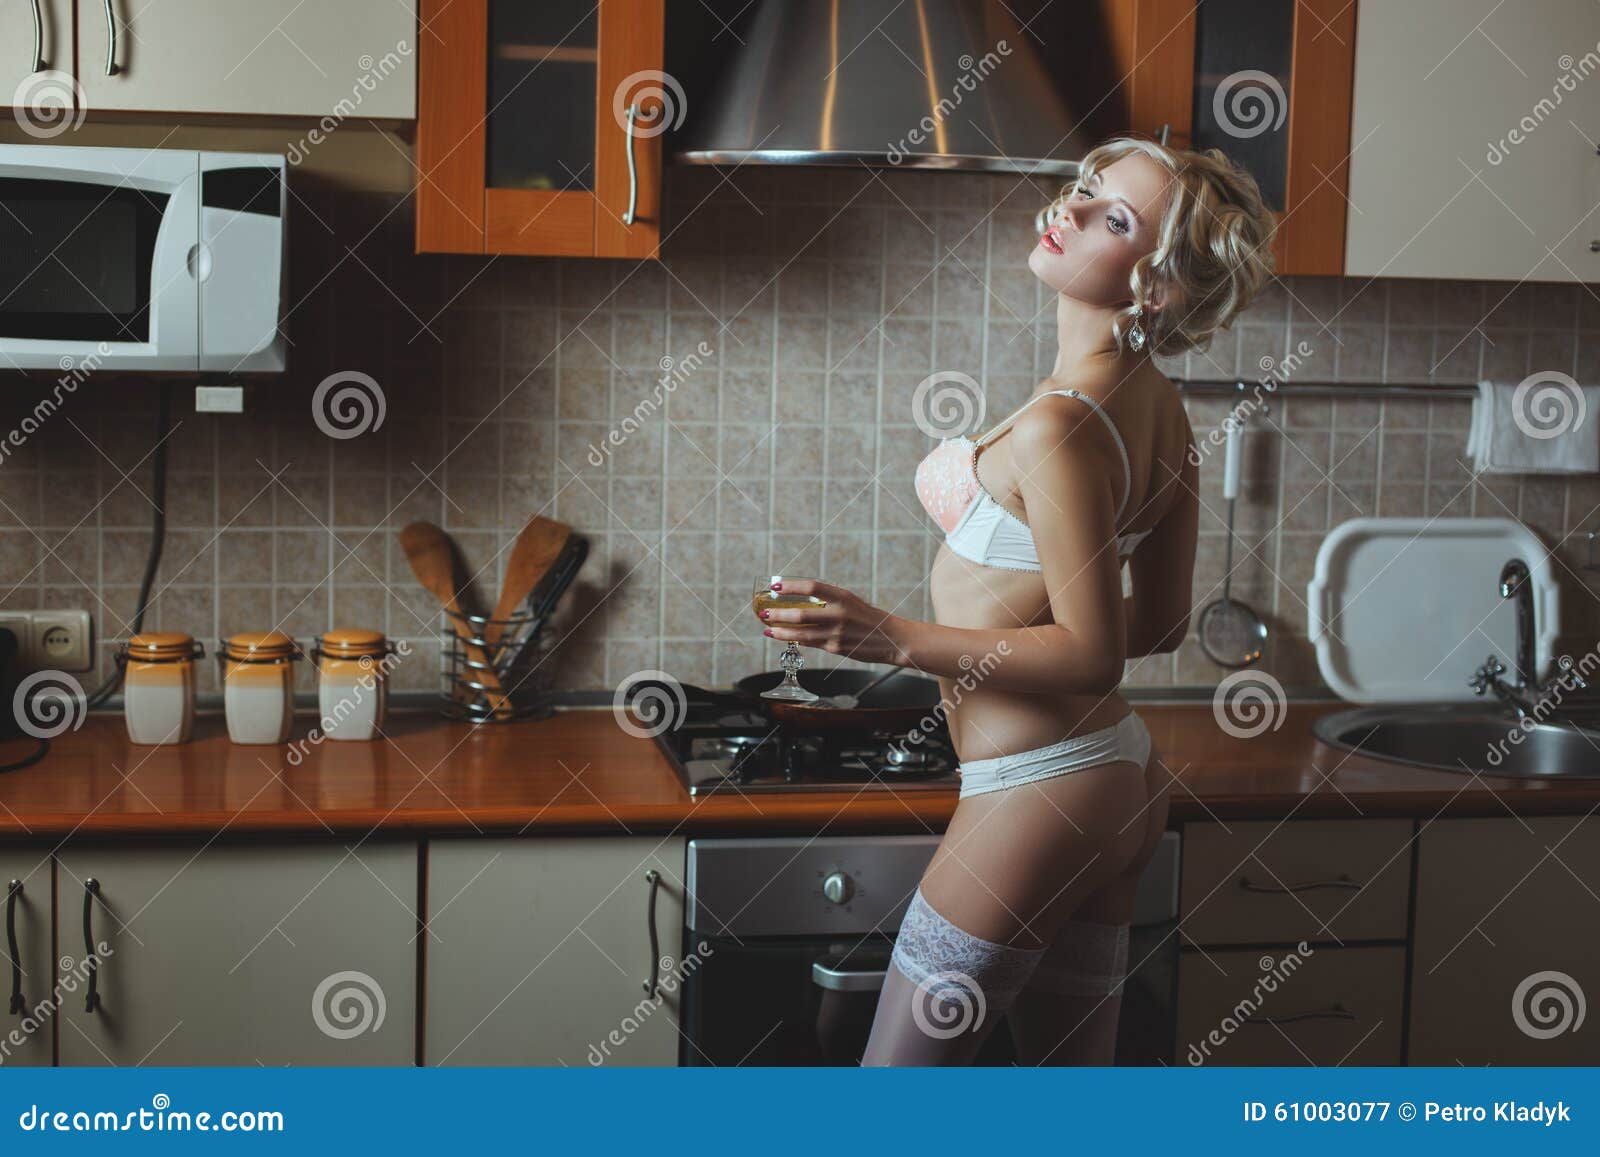 Девушка На Кухне В Белье Фото